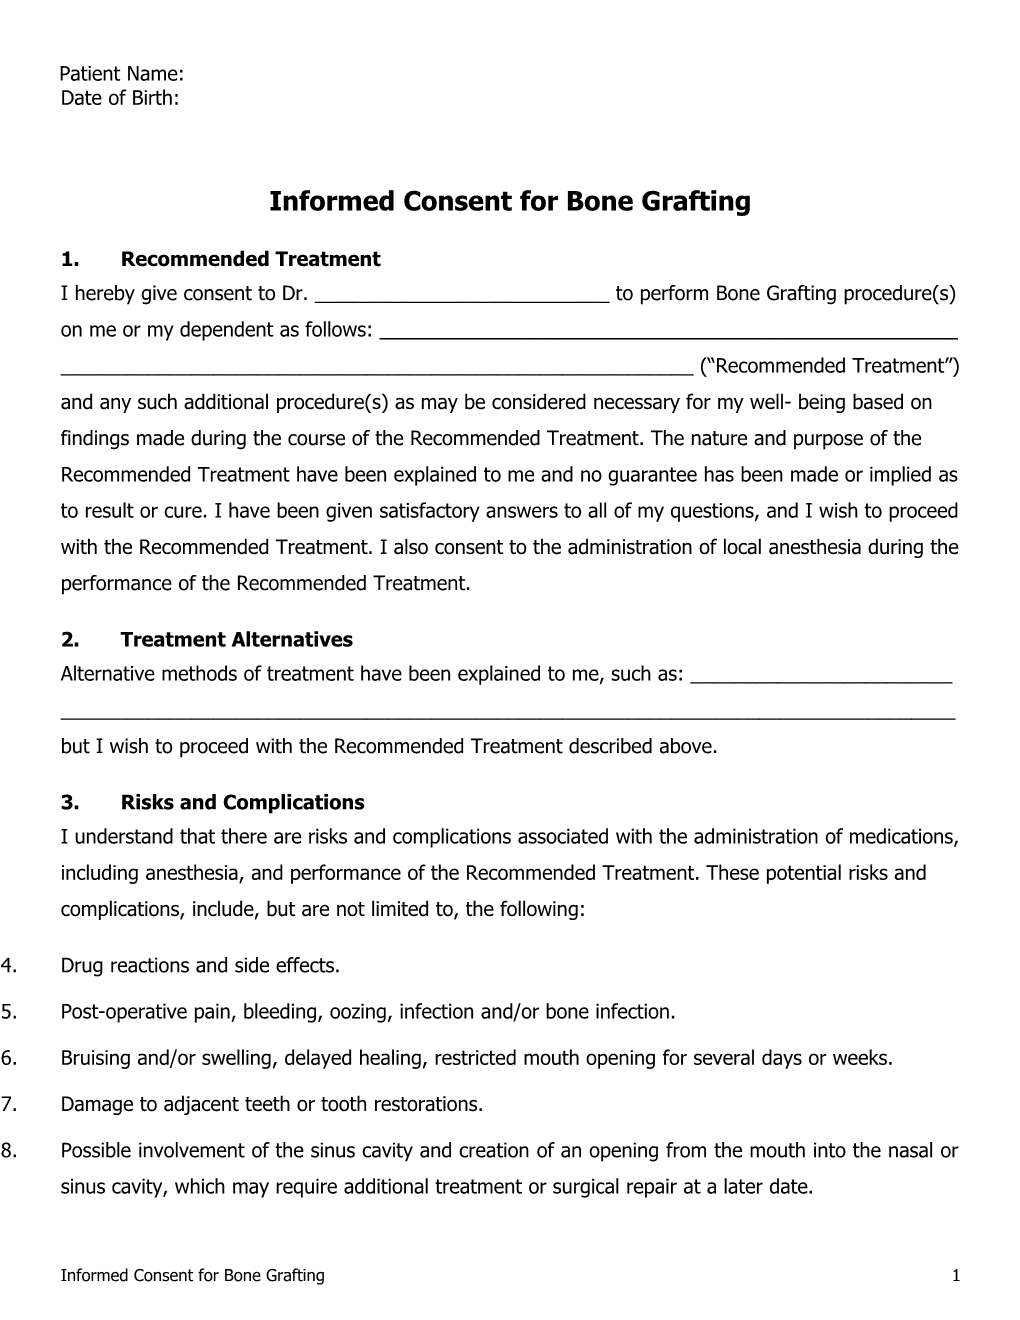 Informed Consent for Bone Grafting